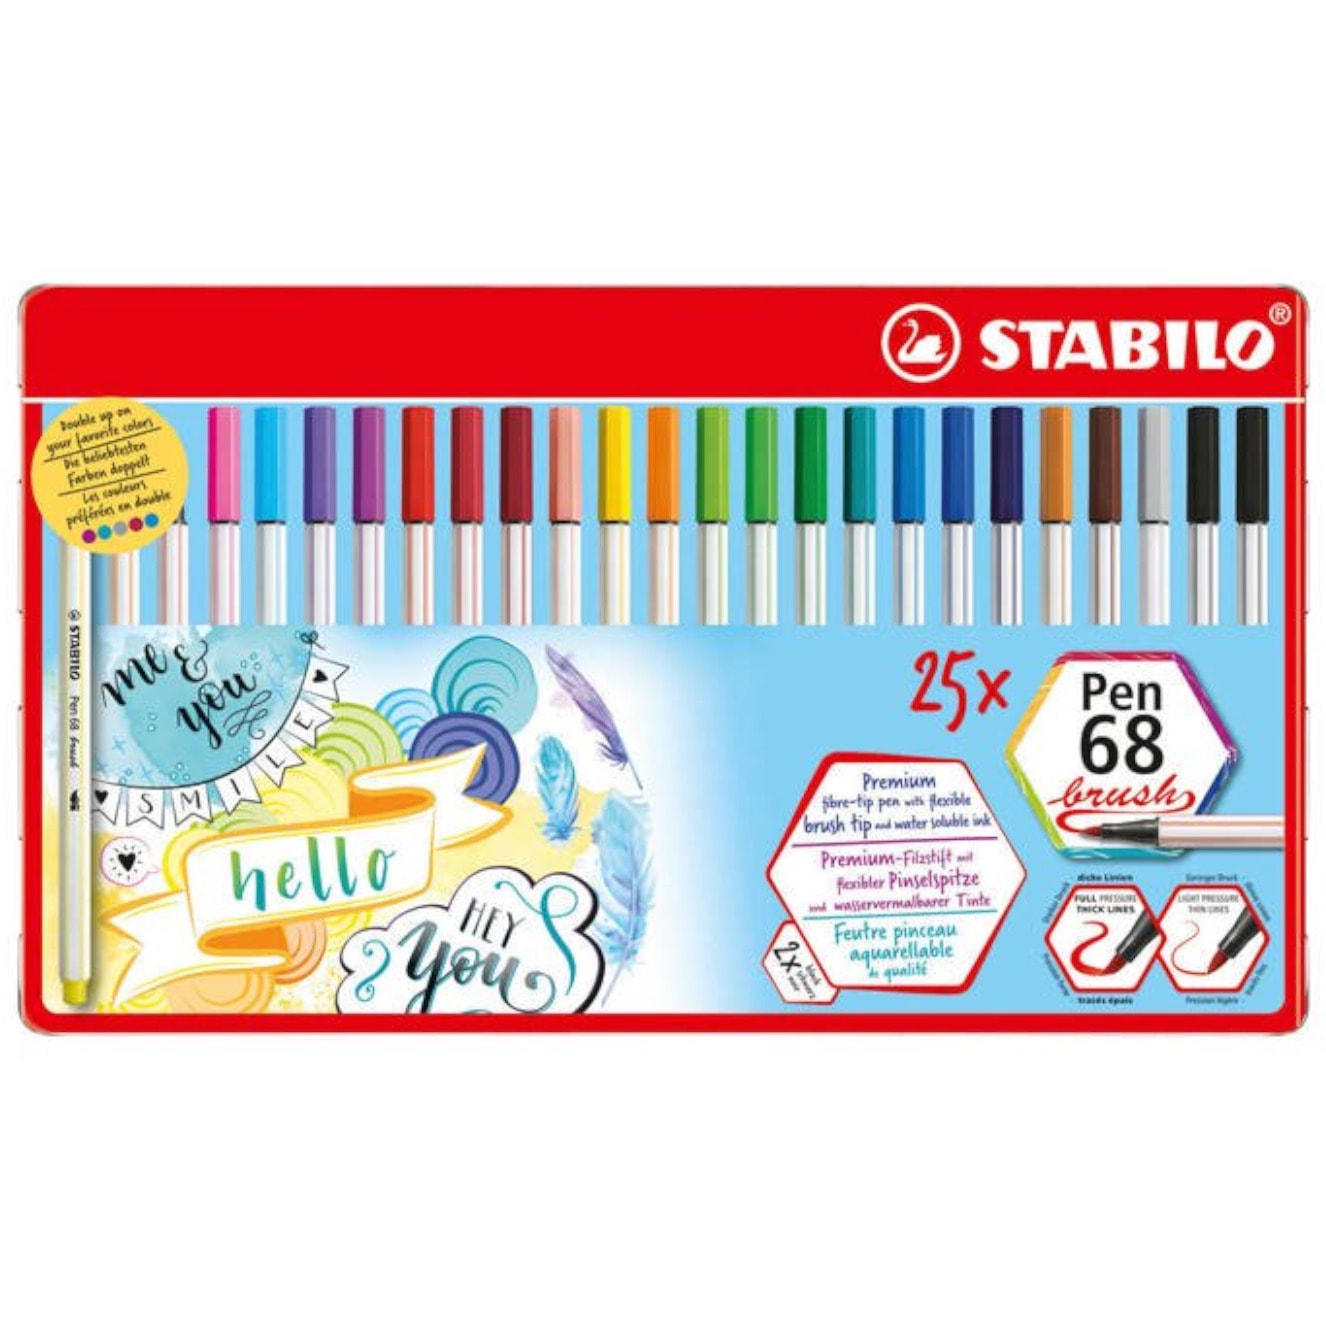 Premium felt-tip pen STABILO Pen 68 - pack of 20 colors